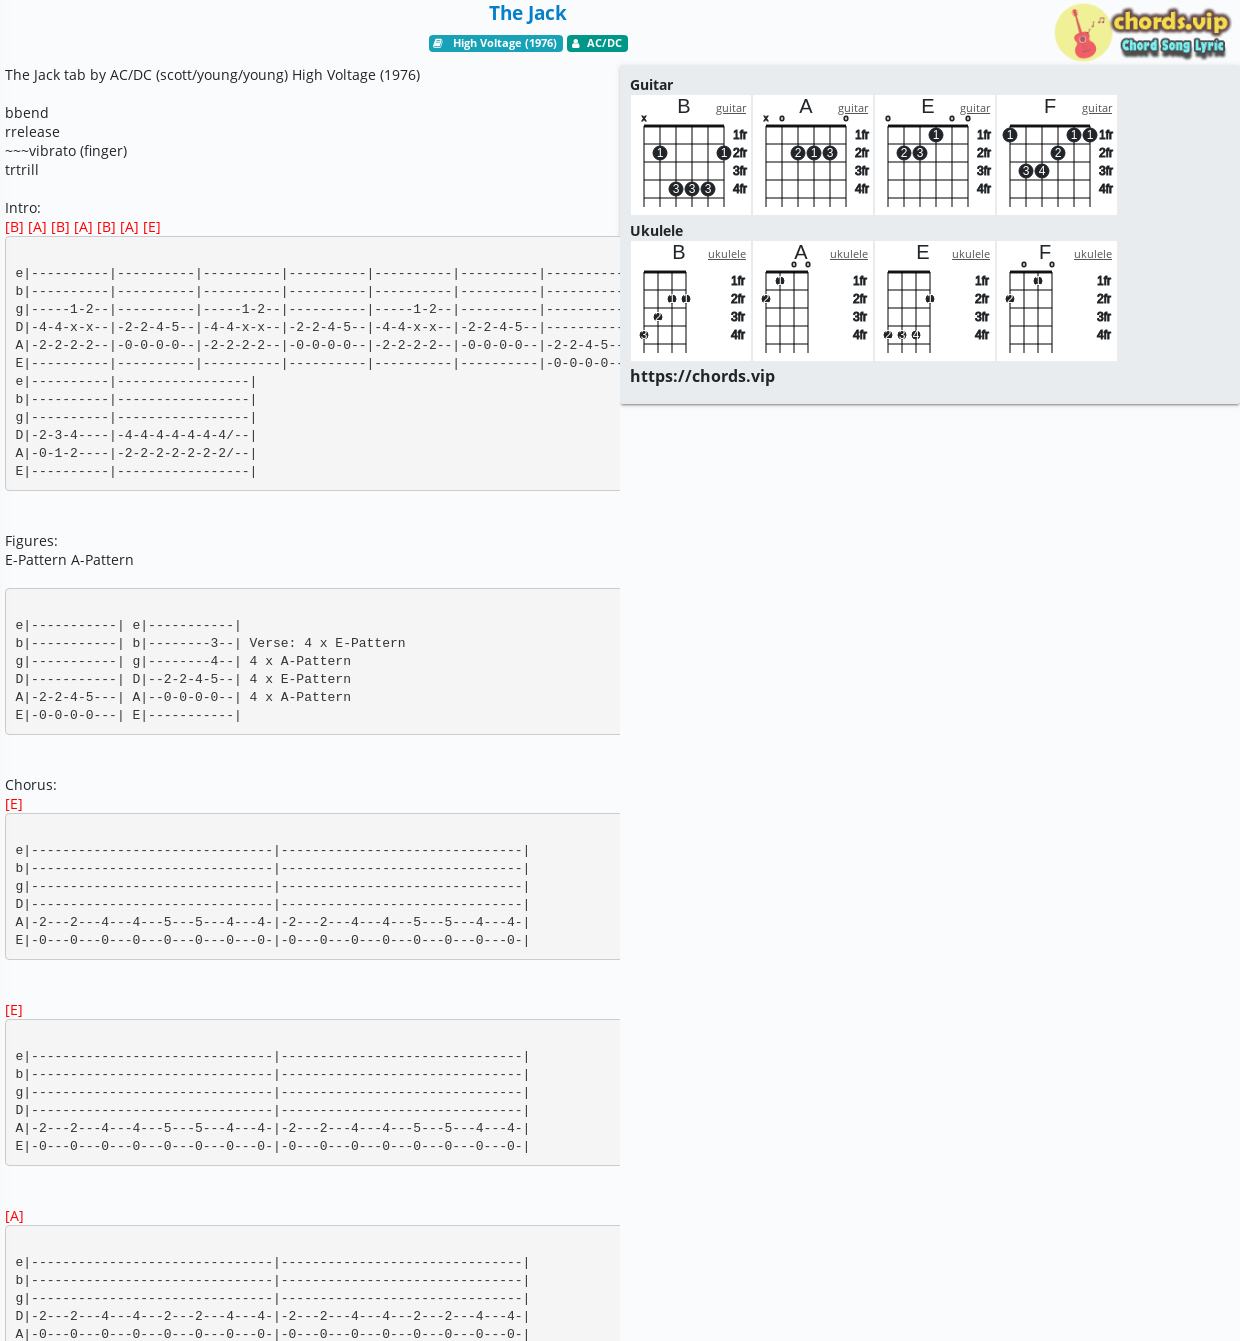 The Jack - AC/DC - tab, song lyric, sheet, guitar, ukulele | chords .vip